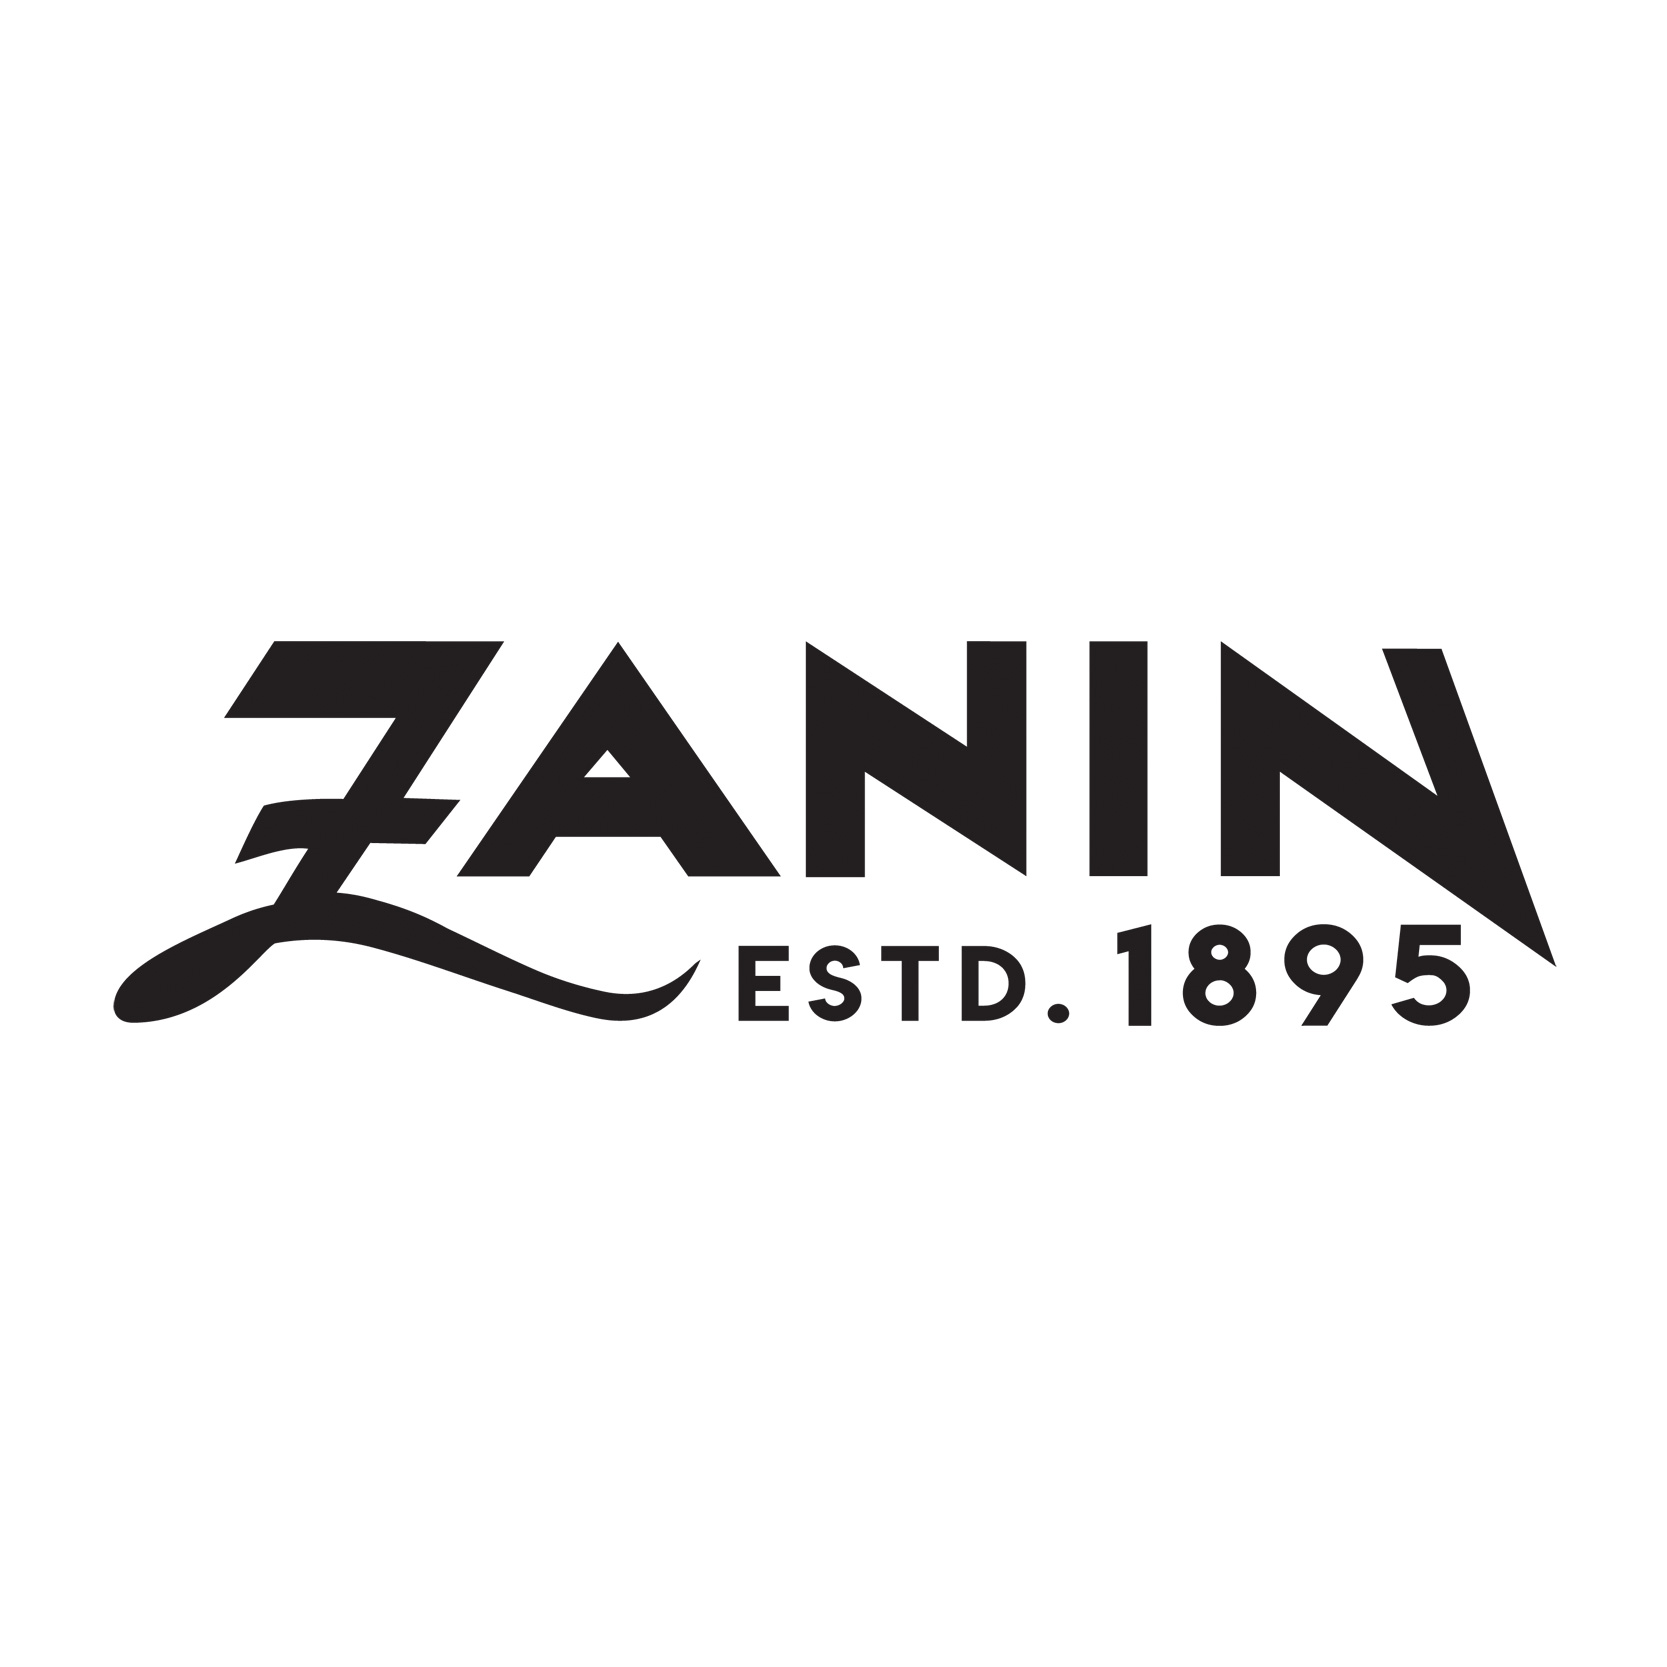 Immagina Creative Communications cliente Zanin for Bartenders logo